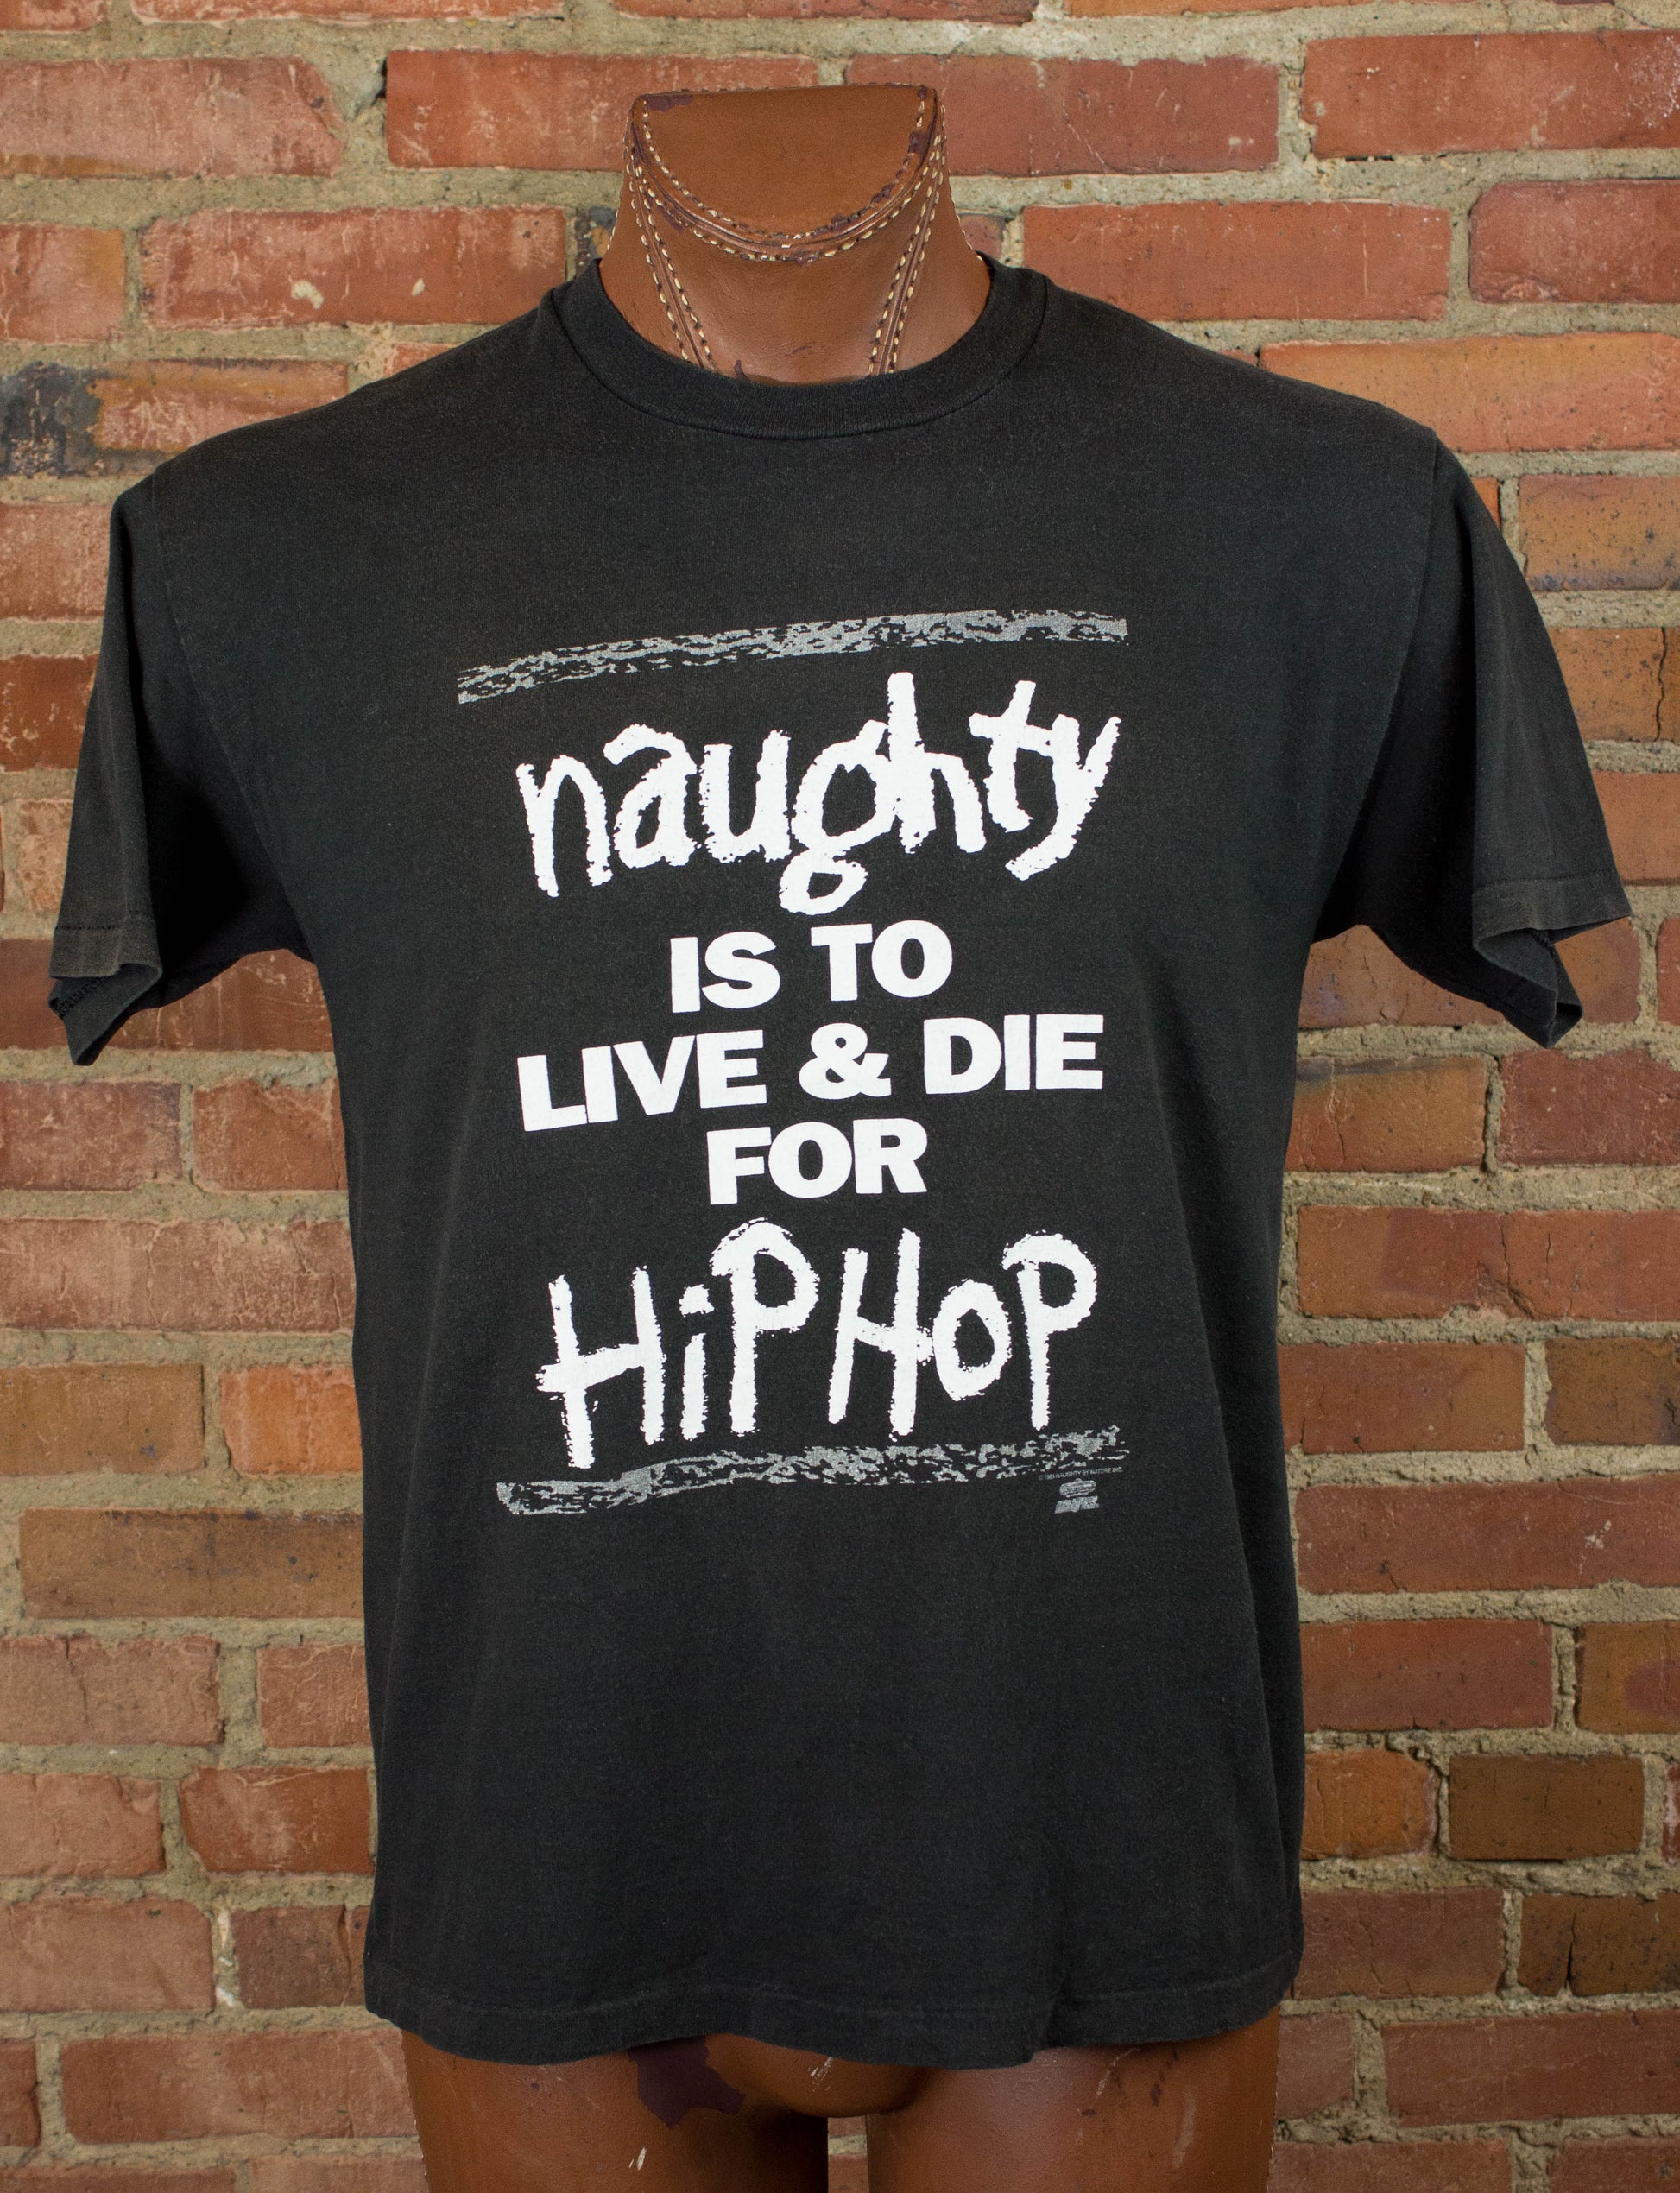 Naughty By Nature 1993 Hip Hop Hooray Rap T Shirt